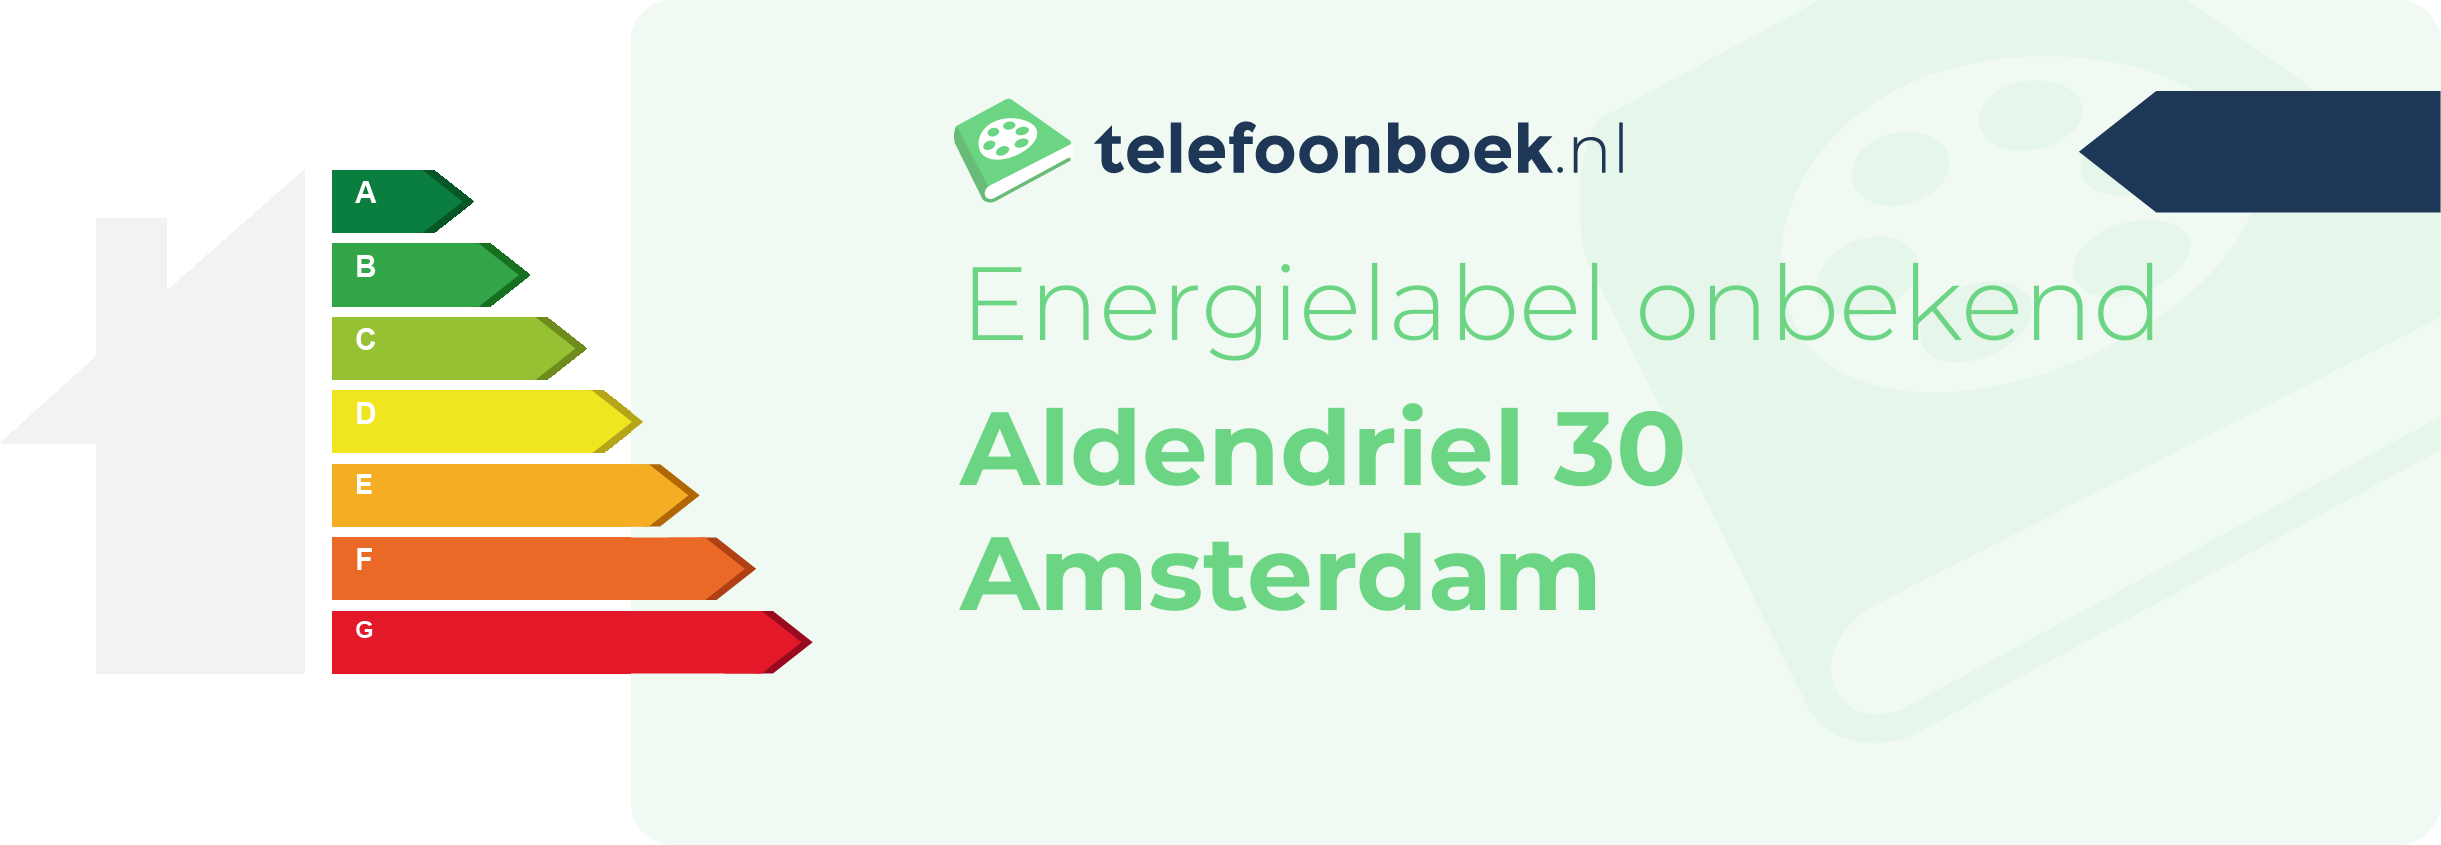 Energielabel Aldendriel 30 Amsterdam